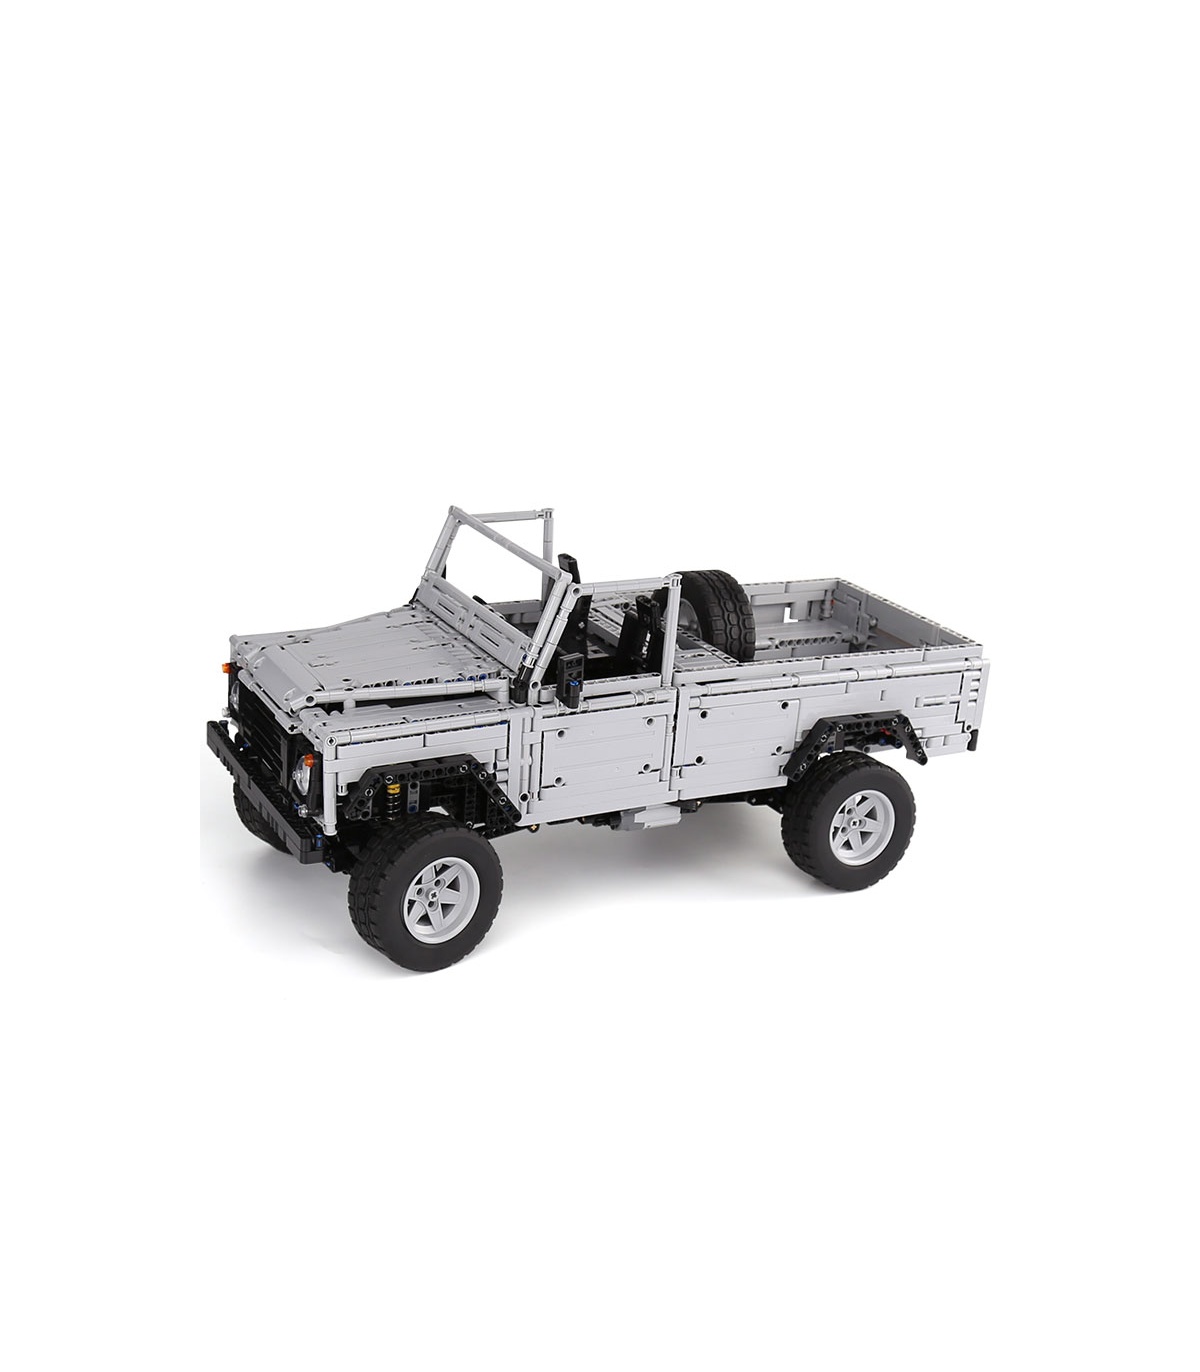 New 3643Pcs MOC RC Wild off-road vehicles model Building Blocks Bricks toys